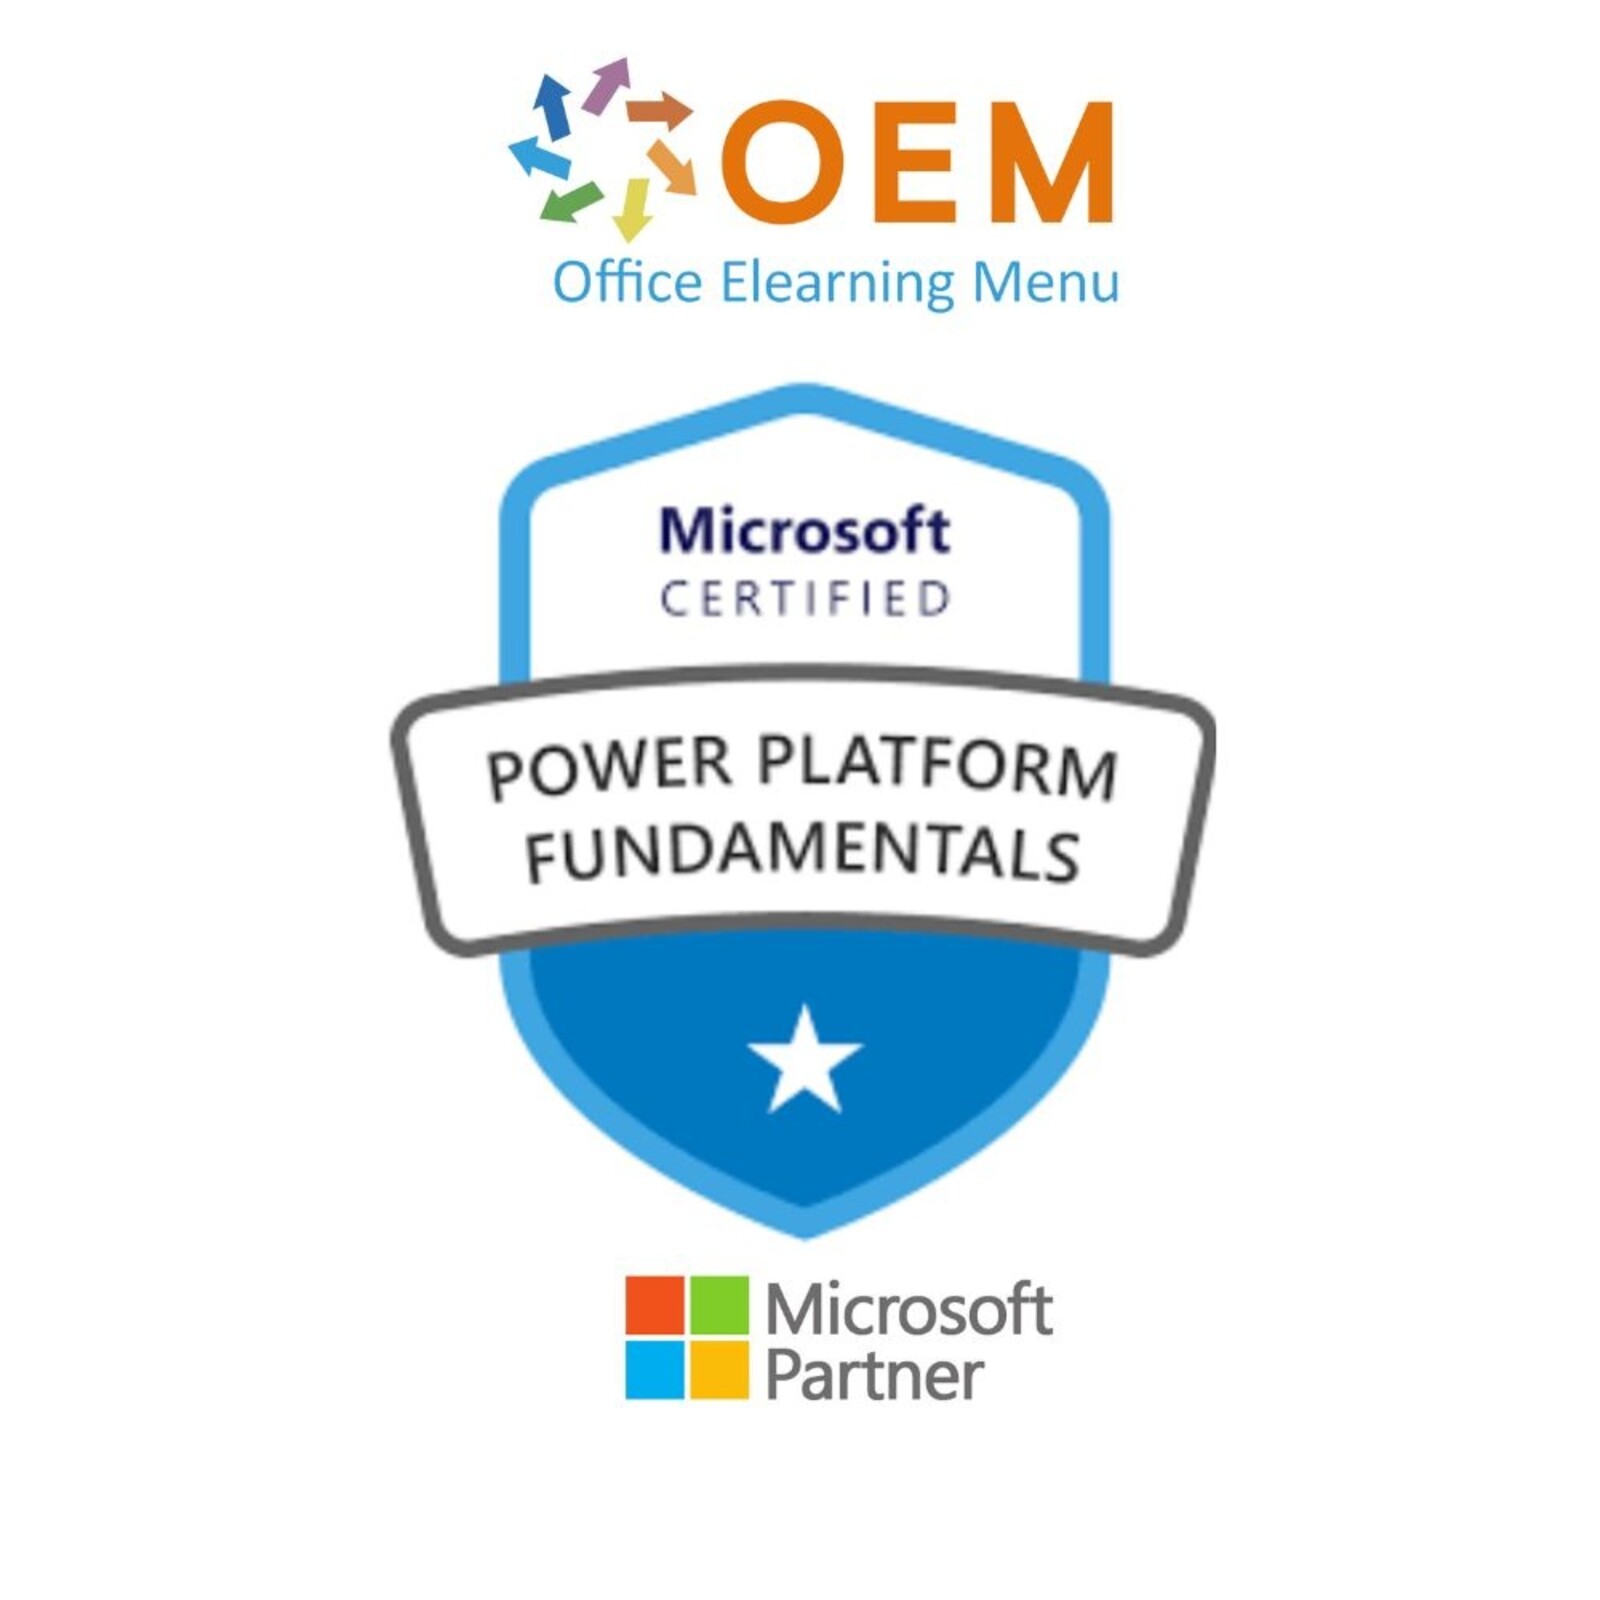 Certiport - Pearson Vue Exam PL-900 Microsoft Power Platform Fundamentals